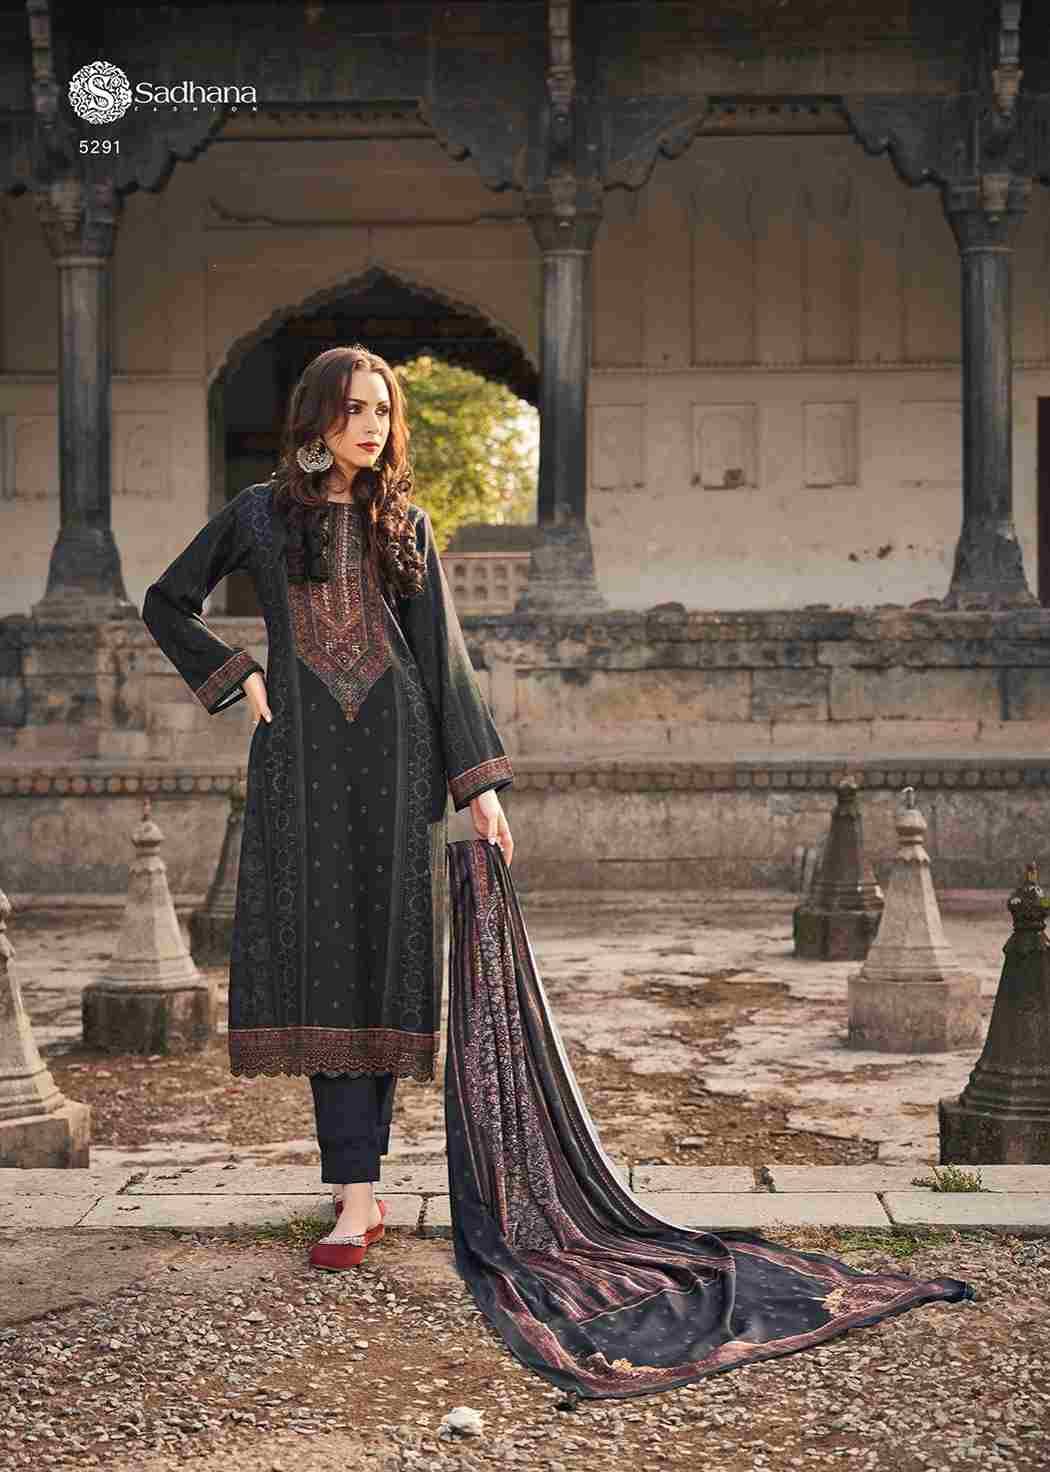 Jaeeza By Sadhana Fashion 5289 To 5296 Series Beautiful Festive Suits Stylish Fancy Colorful Casual Wear & Ethnic Wear Viscose Pashmina Dresses At Wholesale Price